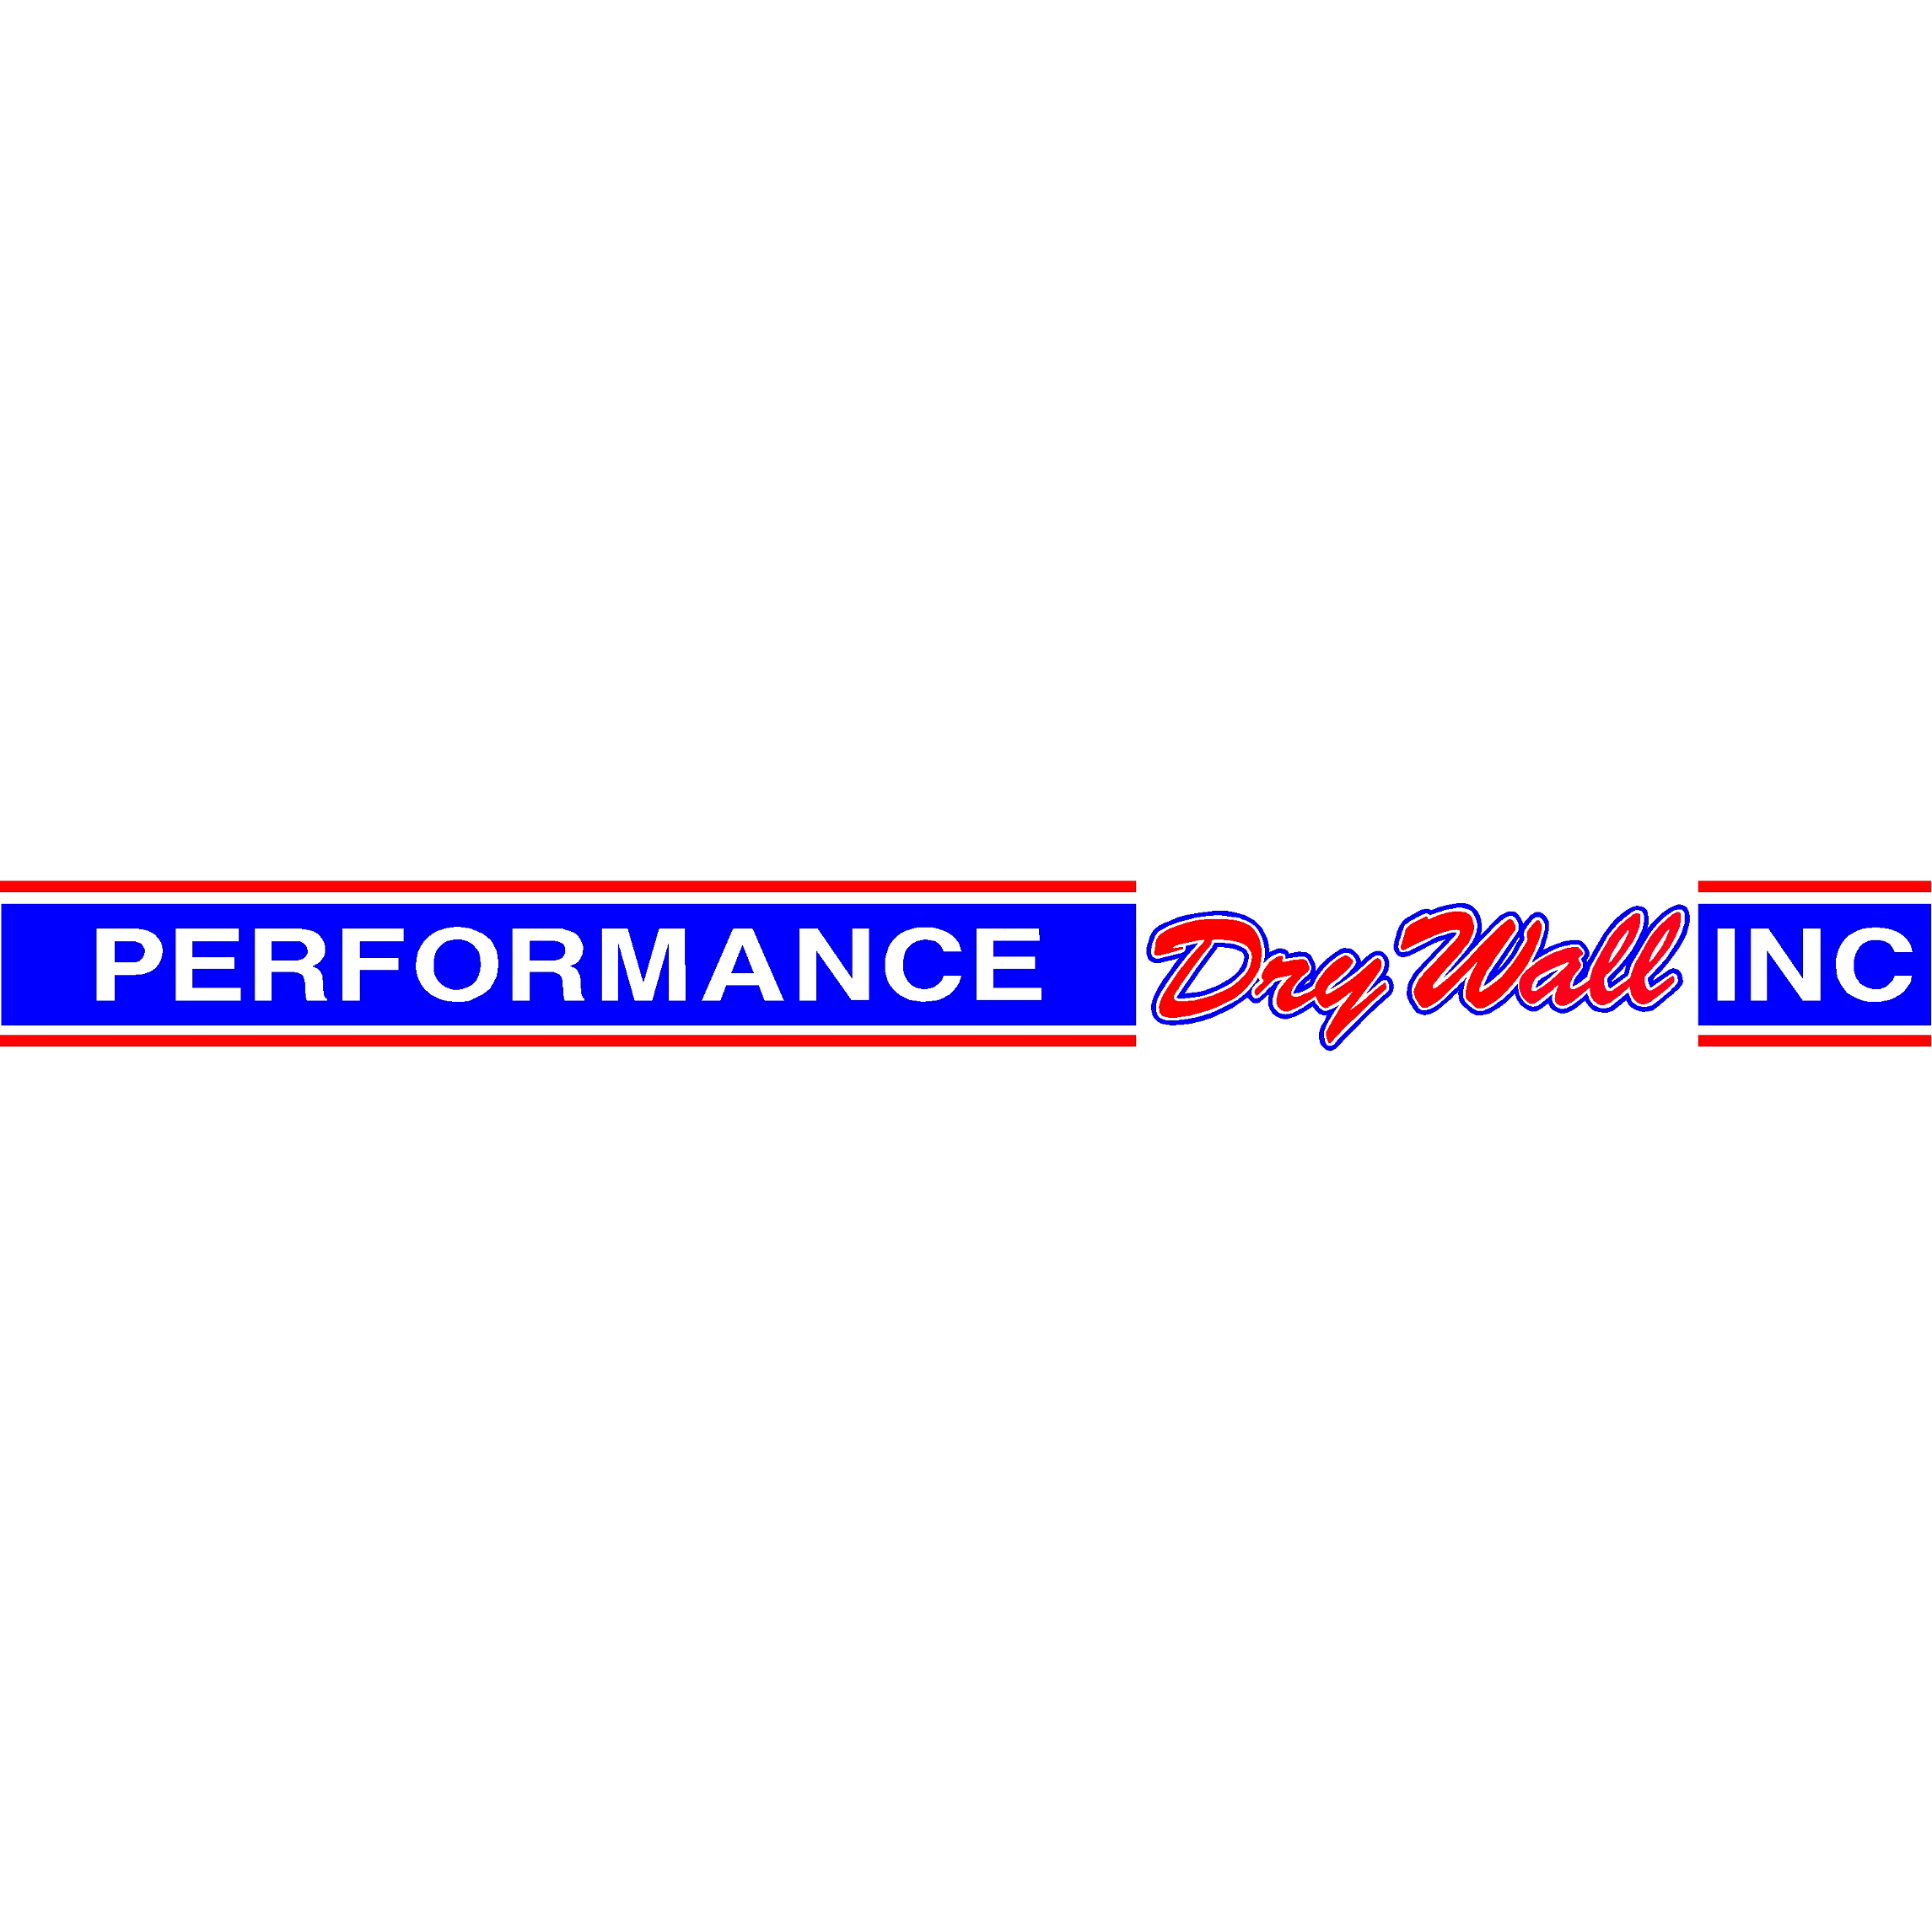 Performance Drywall